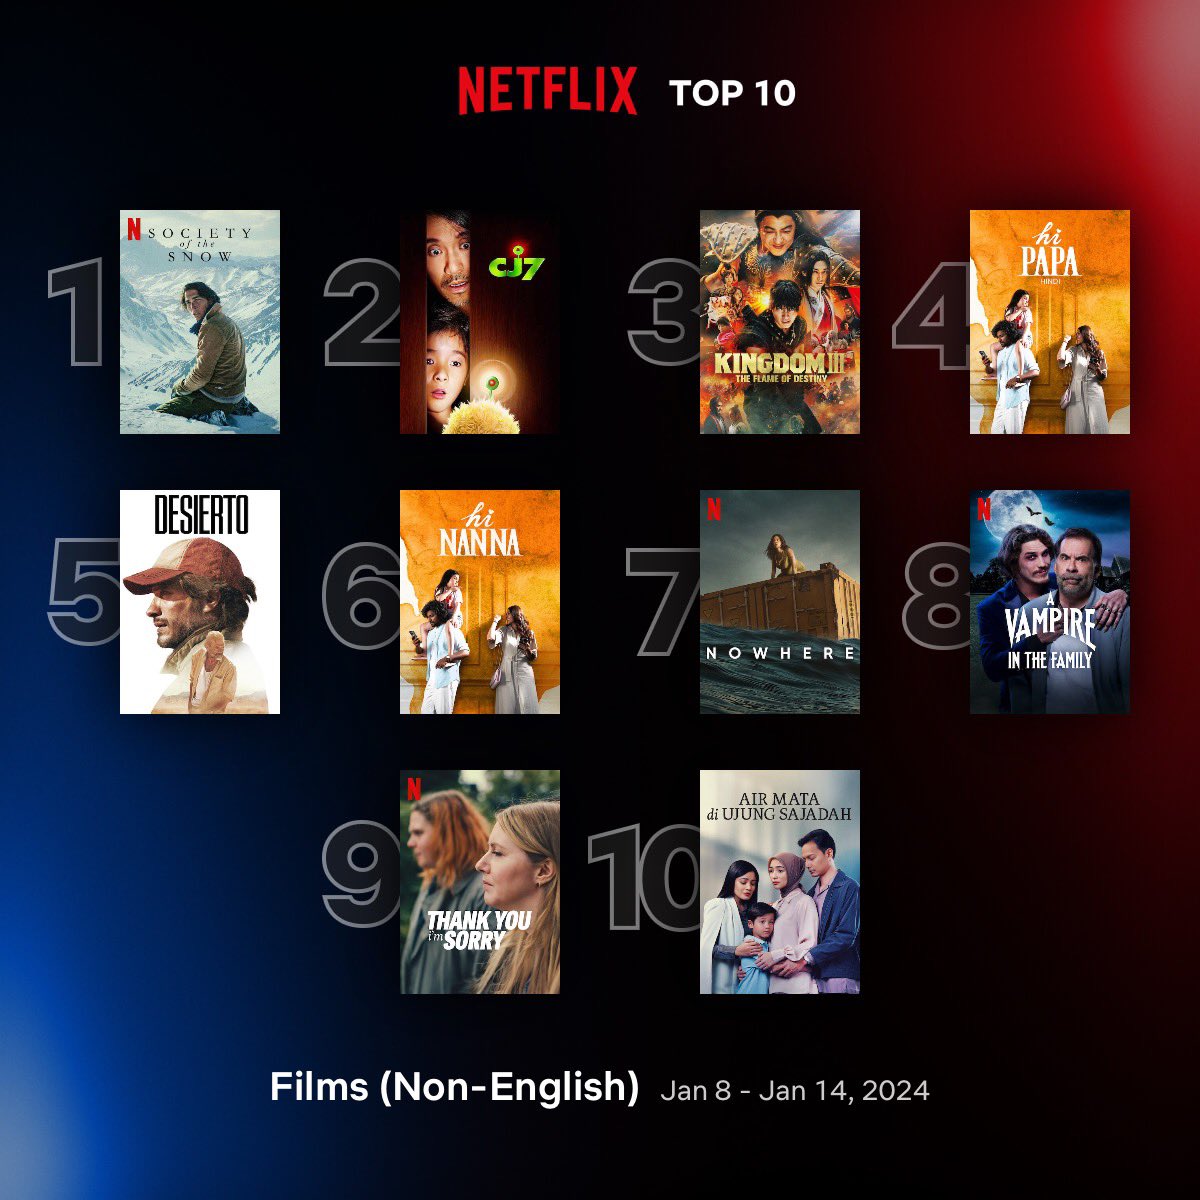 Global Top 10 Non-English Films on Netflix between 8 - 14 January

1. #SocietyOfTheSnow 🇪🇸🇺🇸
2. #CJ7 🇭🇰🇨🇳
3. #Kingdom3: The Flame of Destiny 🇯🇵
4. #HiPapa (Hindi) 🇮🇳
5. #Desierto 🇲🇽 🇫🇷
6. #HiNanna 🇮🇳
7. #Nowhere 🇪🇸
8. #AVampireInTheFamily 🇧🇷
9. #ThankYouImSorry 🇸🇪
10.